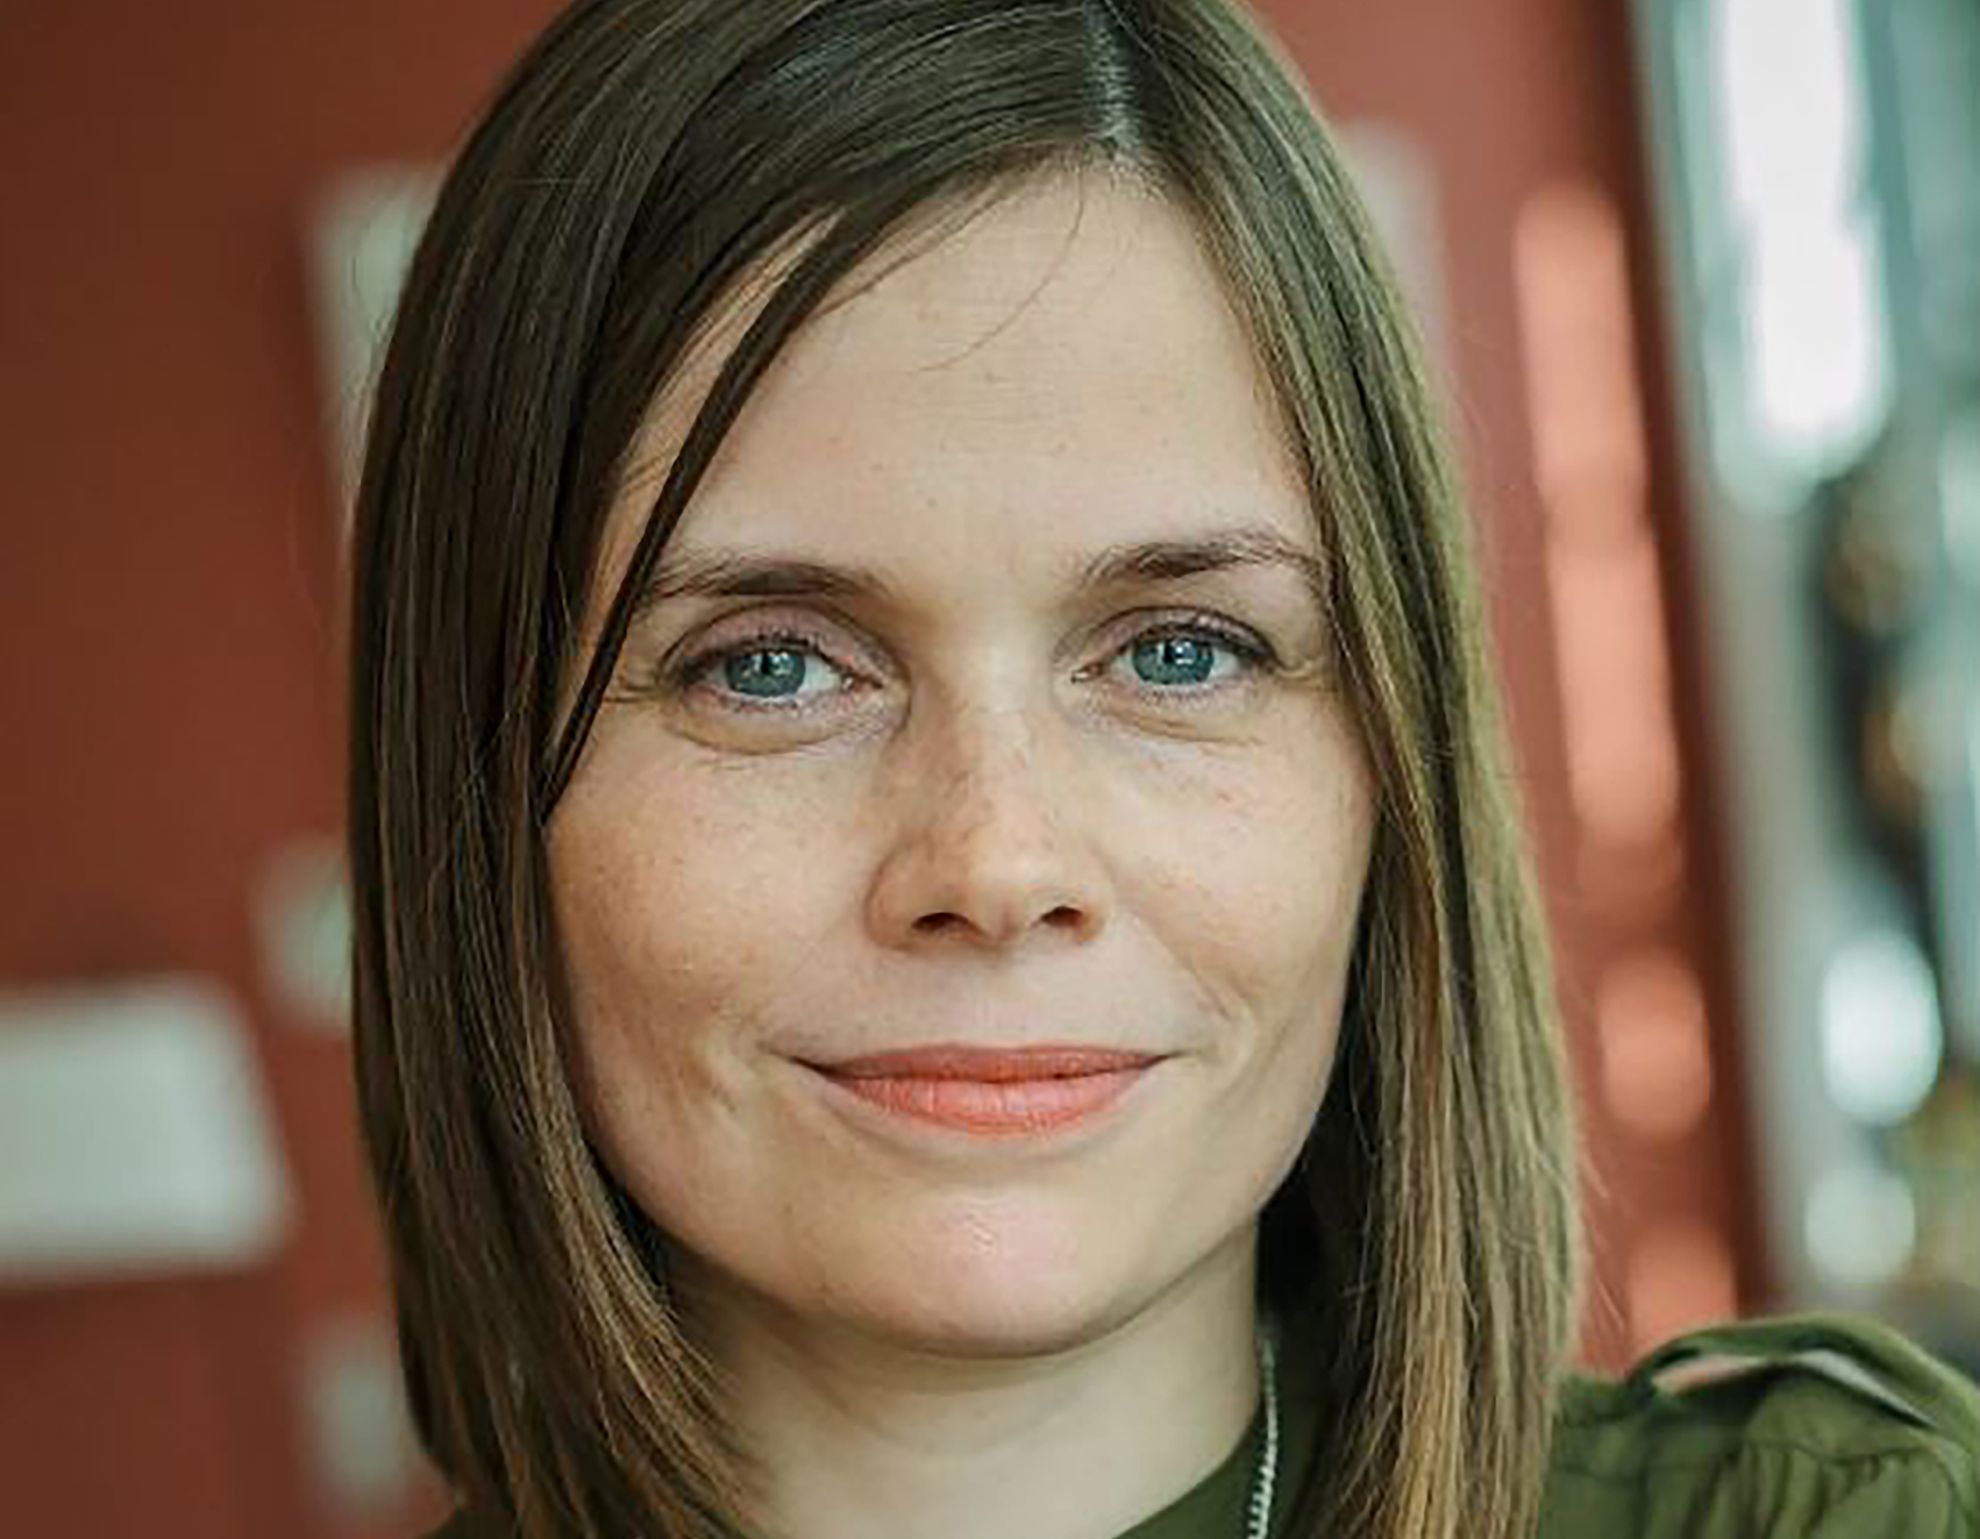 Islande : Femmes au bord de la crise de terre